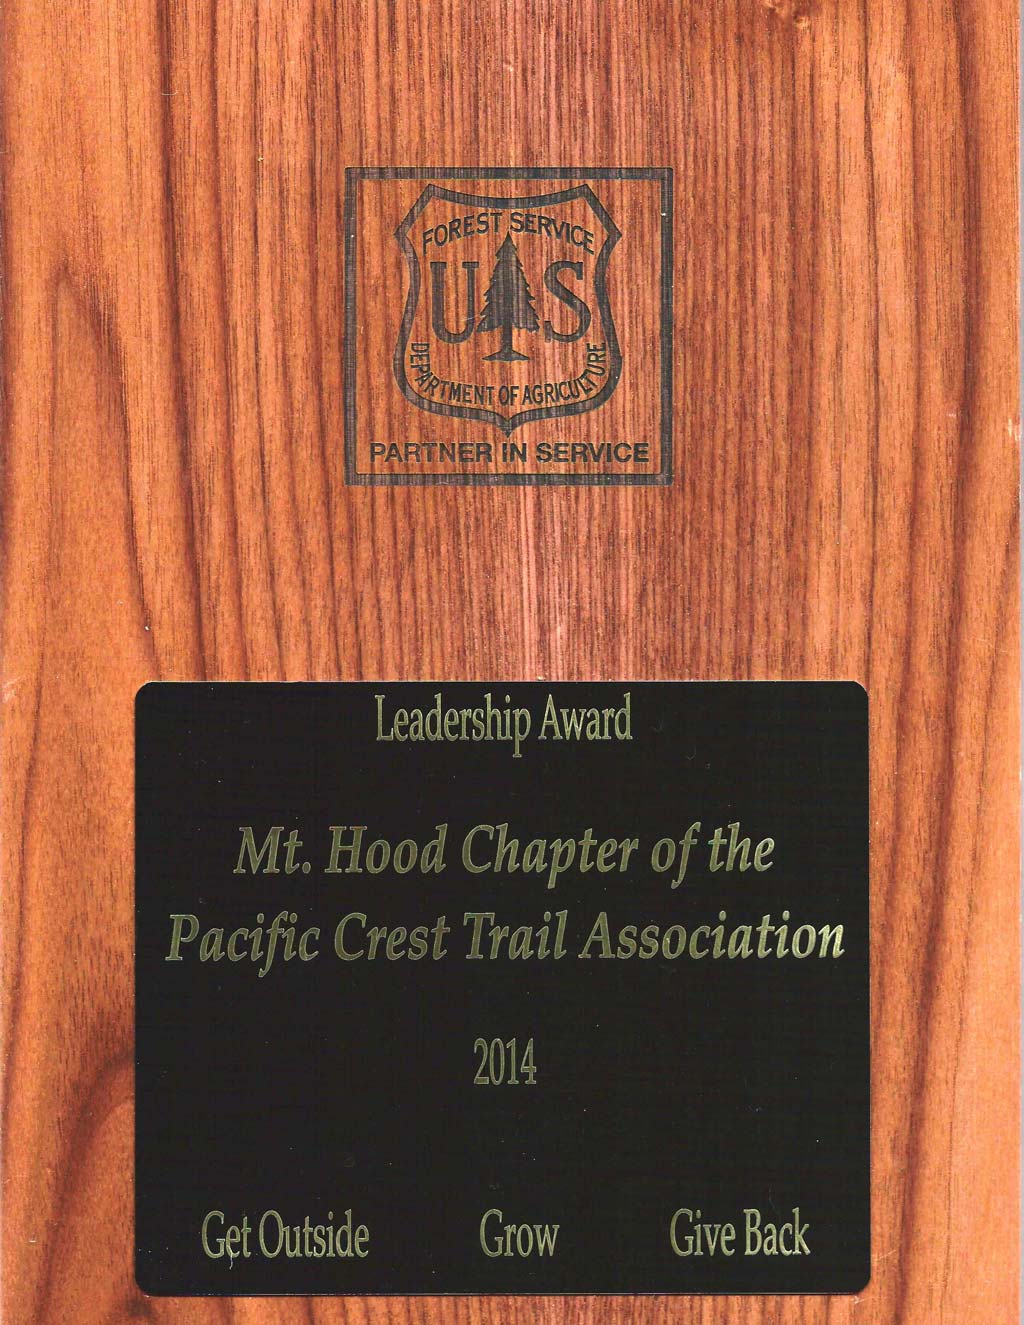 Forest Service Volunteers & Service Leadership Award